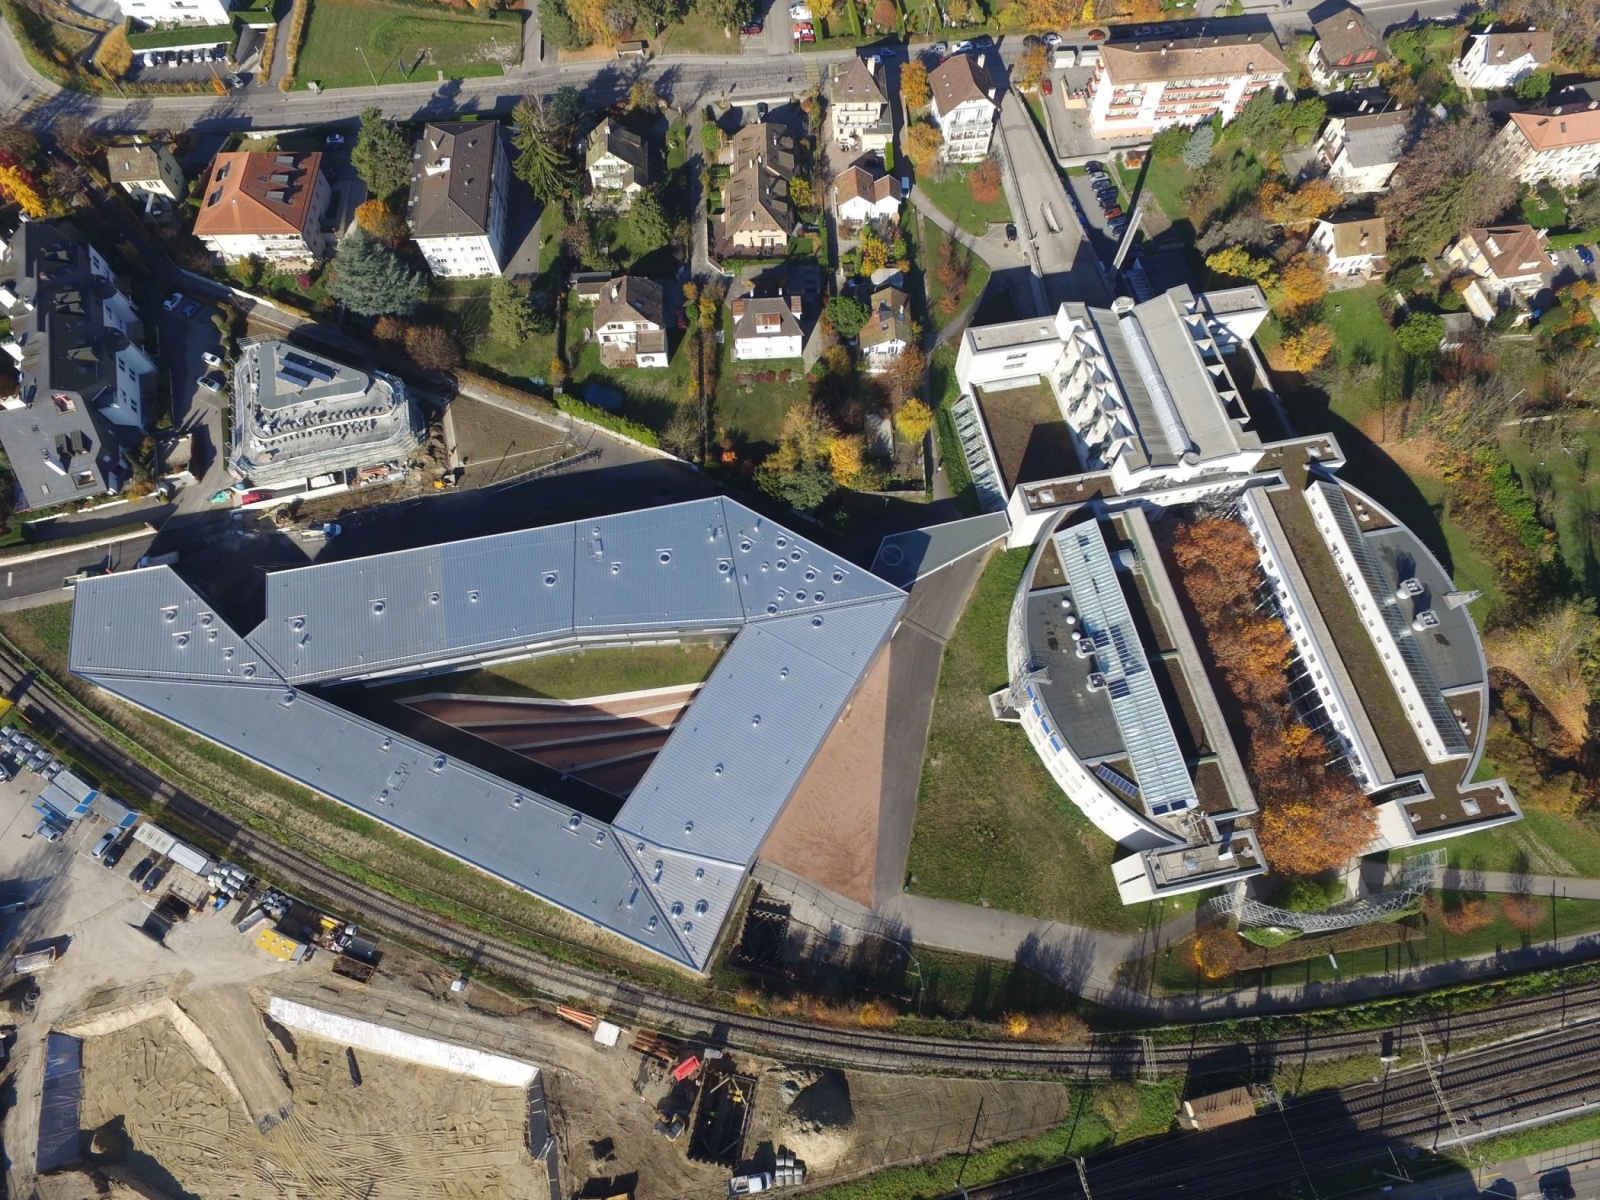 Aerienne photo chantier du gymnase drone DJI Nyon le 10.11.2015 © photo Michel Perret Aerienne_gymnase_Nyon_10_11_2015